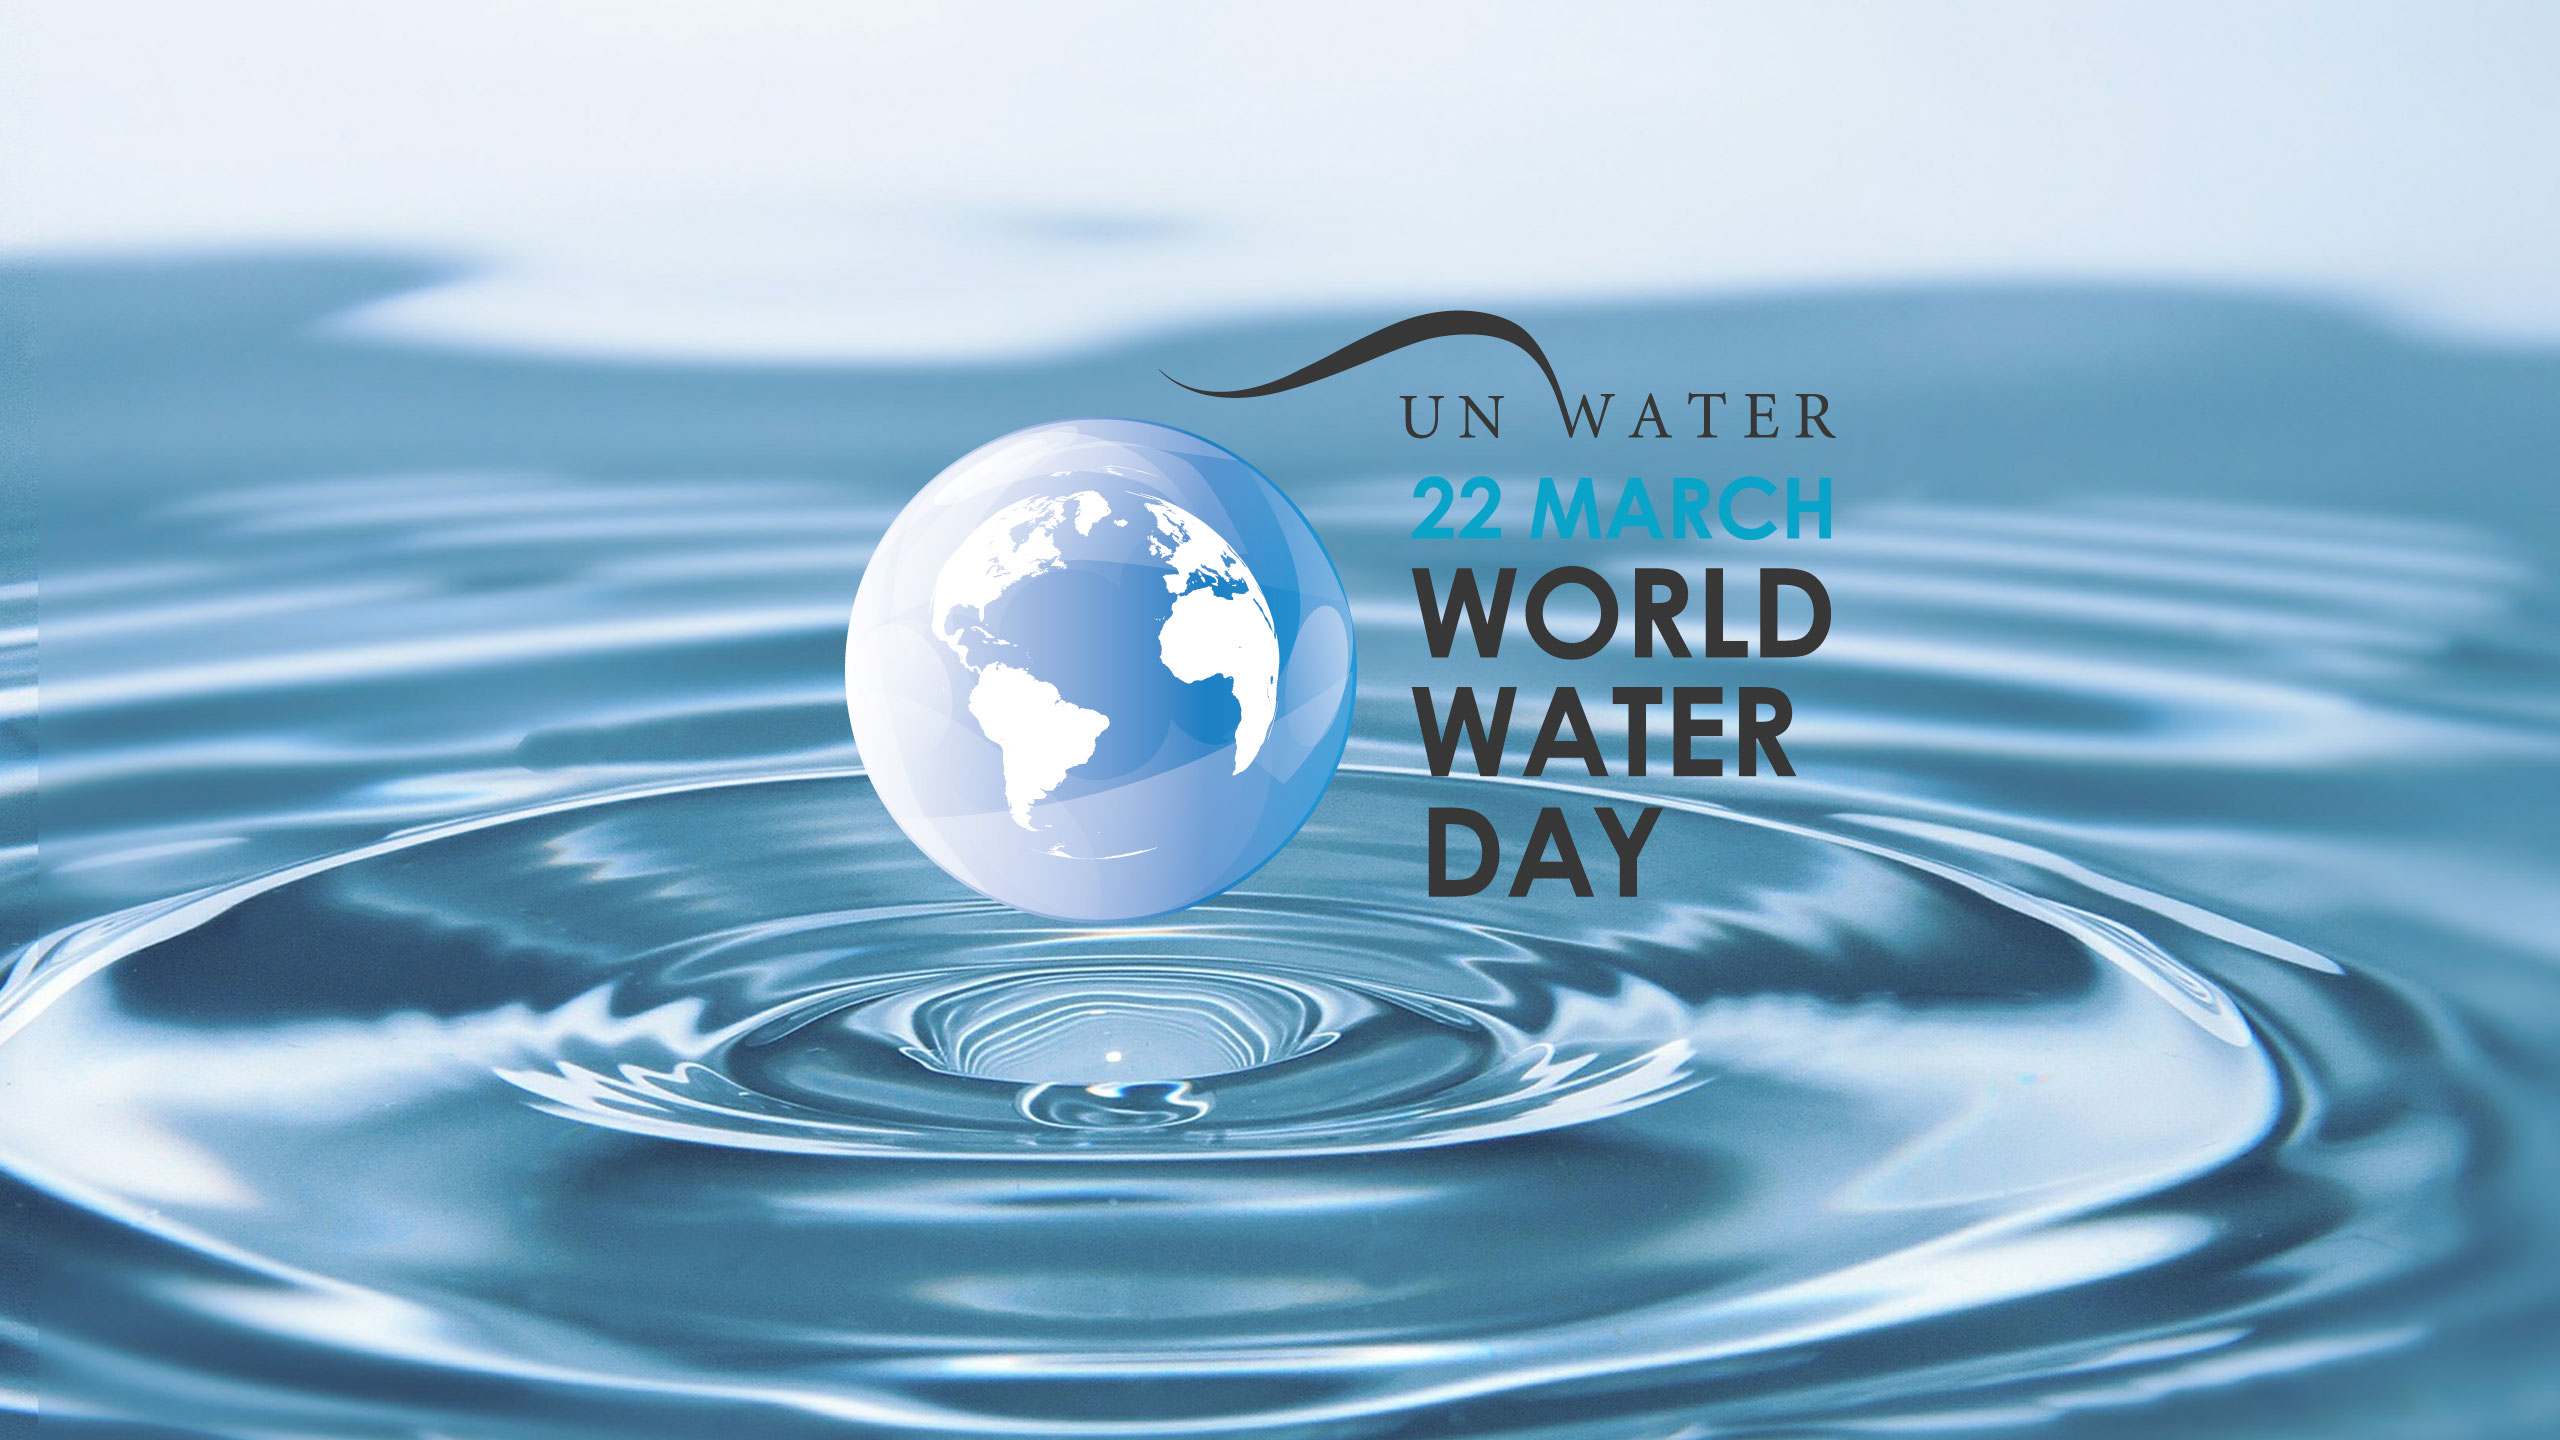 WORLD WATER DAY 